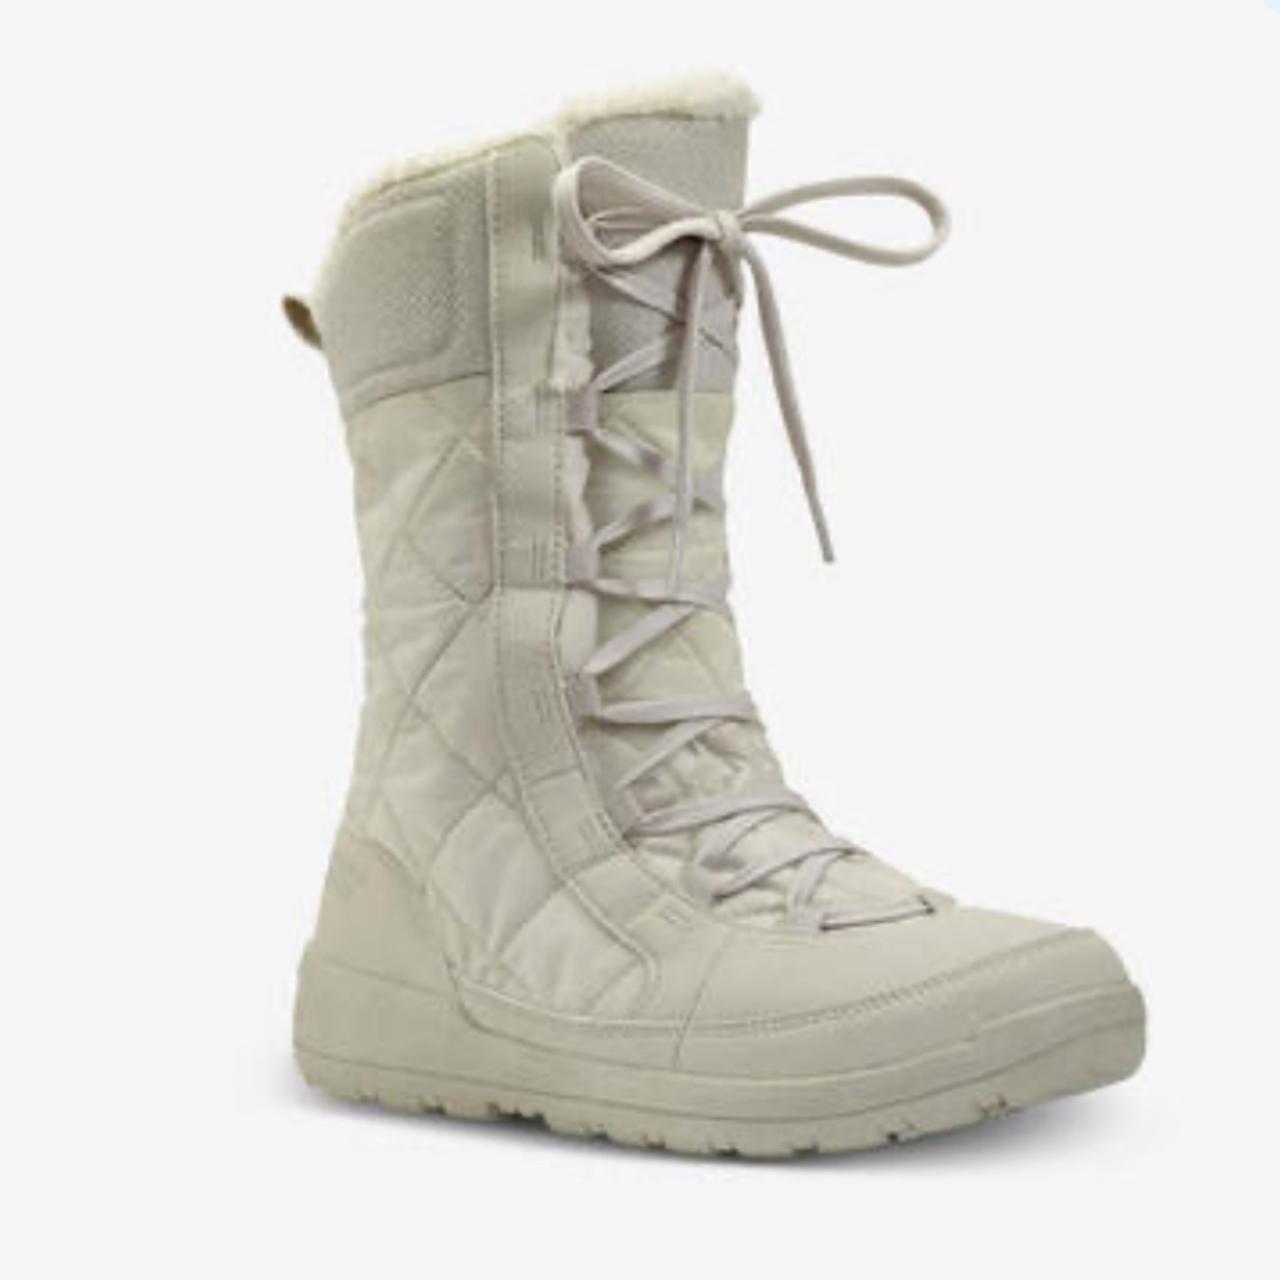 Women's warm waterproof snow boots - sh500 high - - Depop